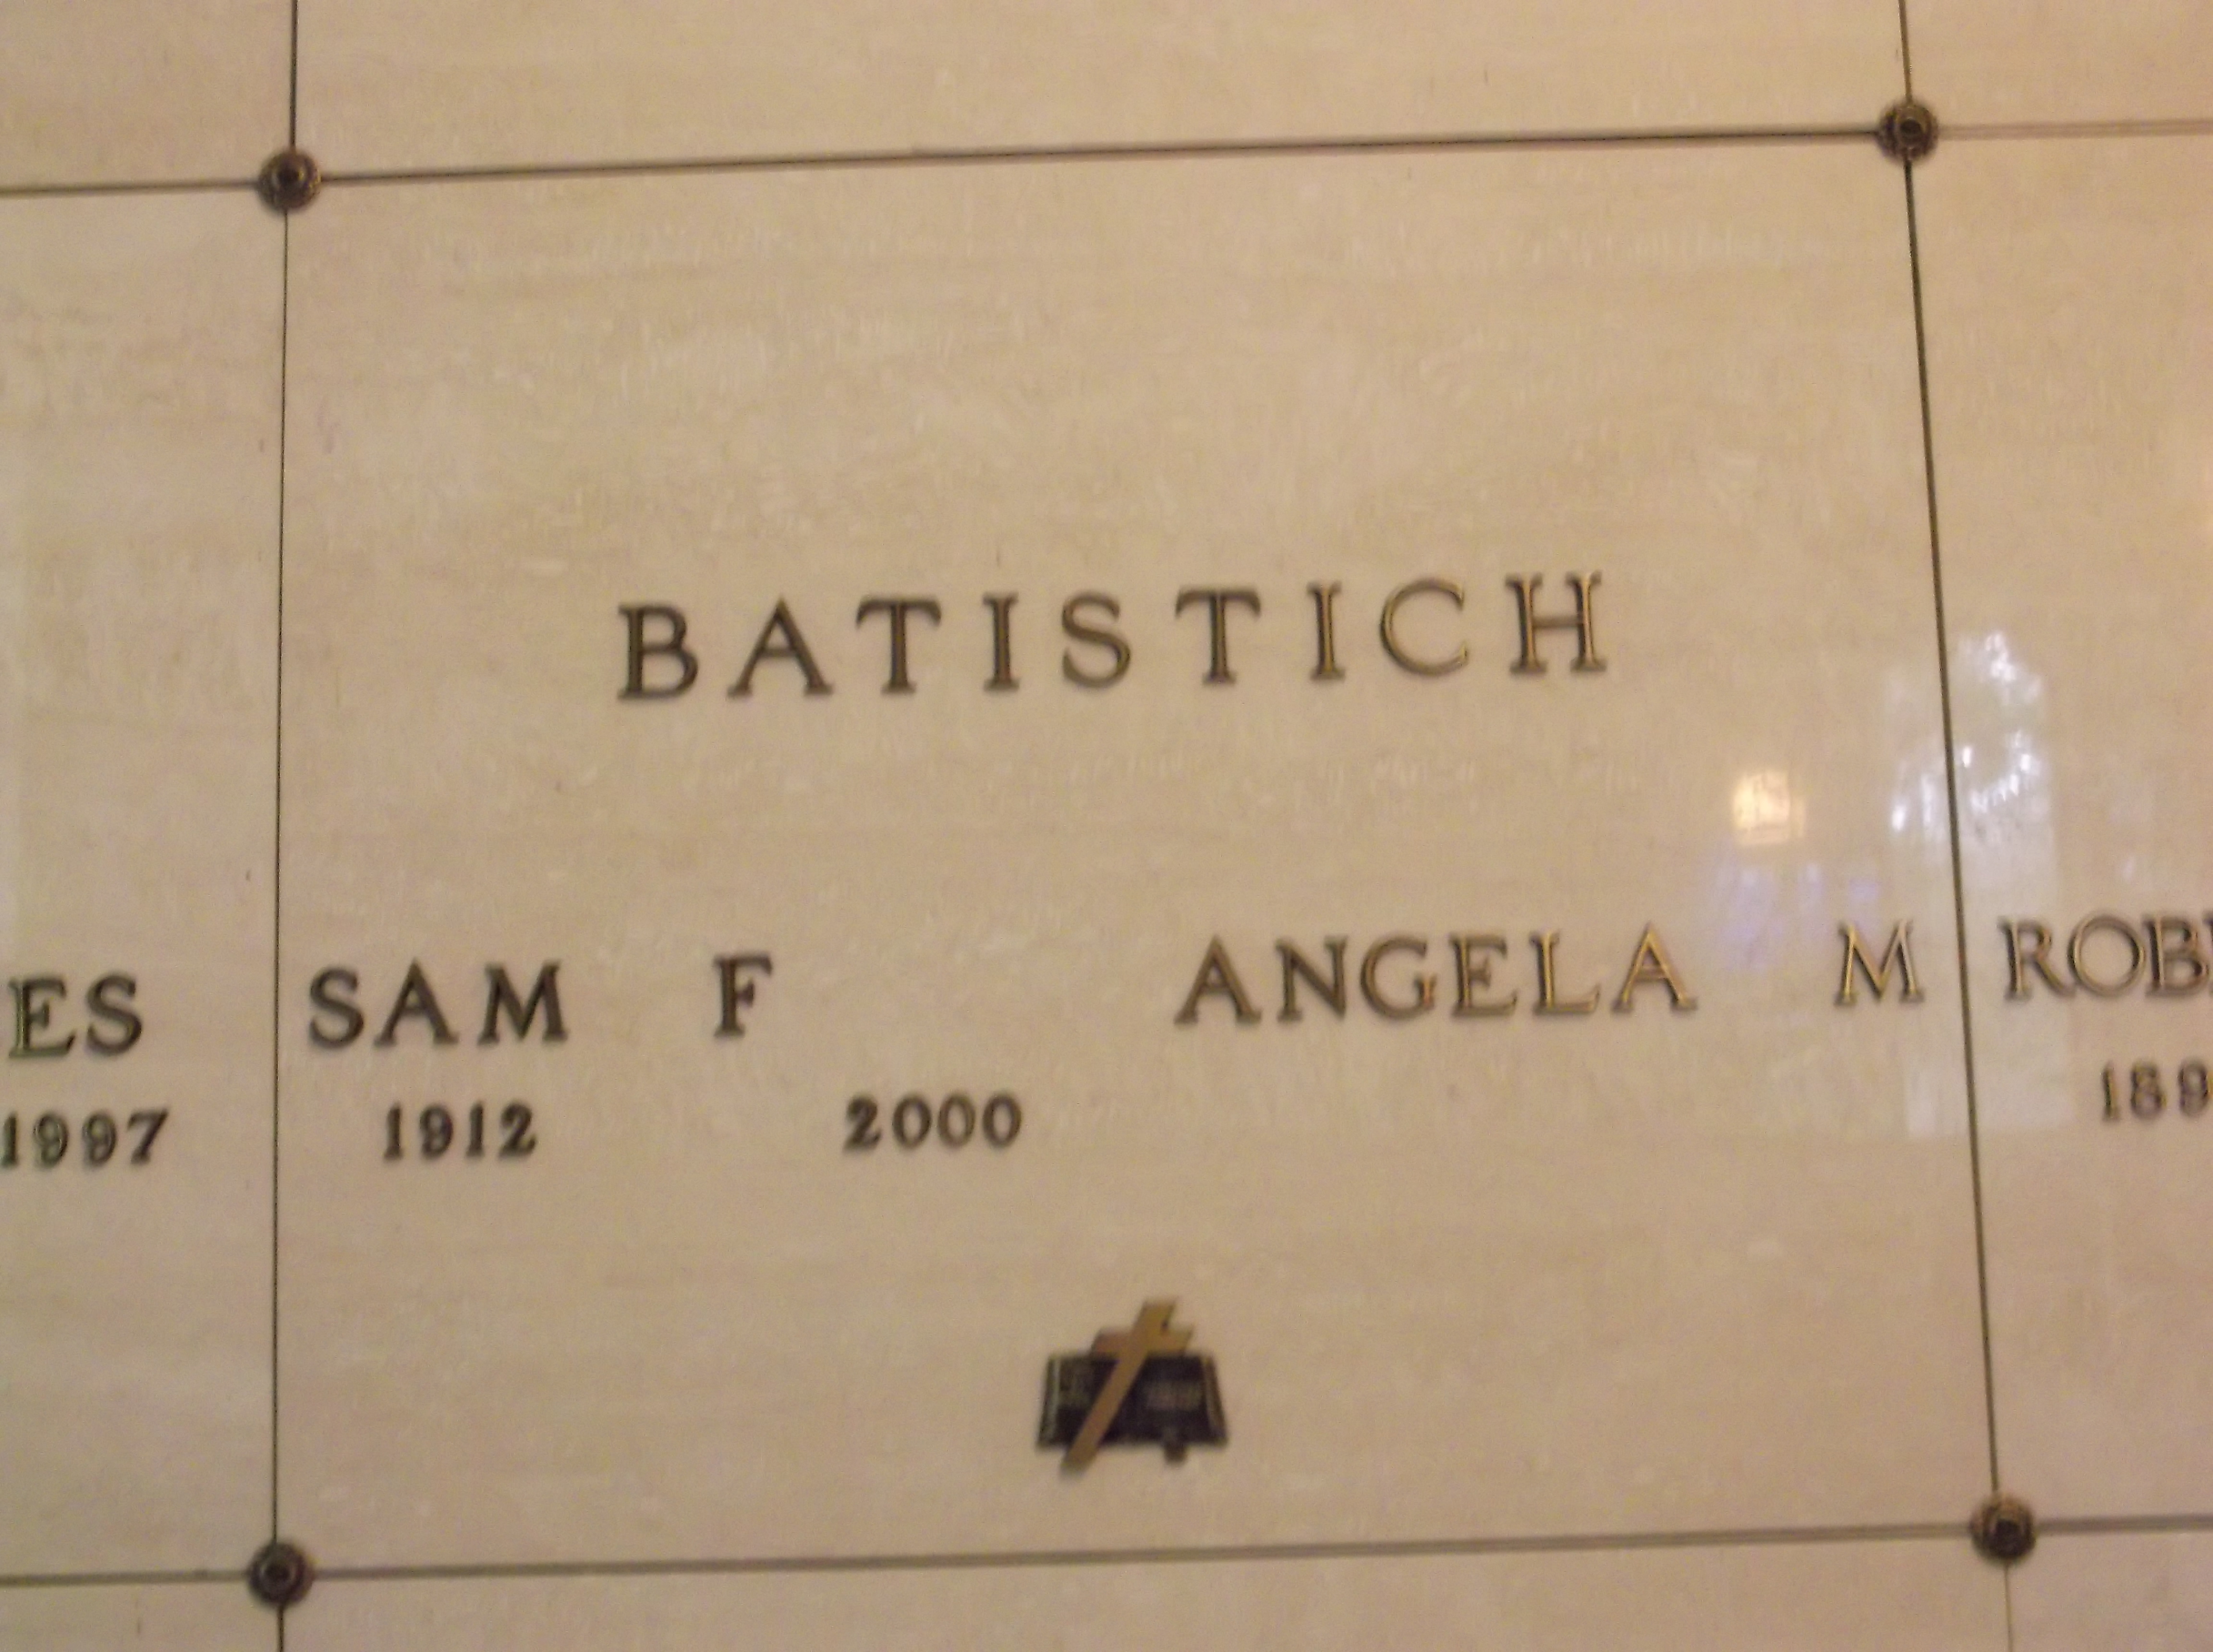 Sam F Batistich